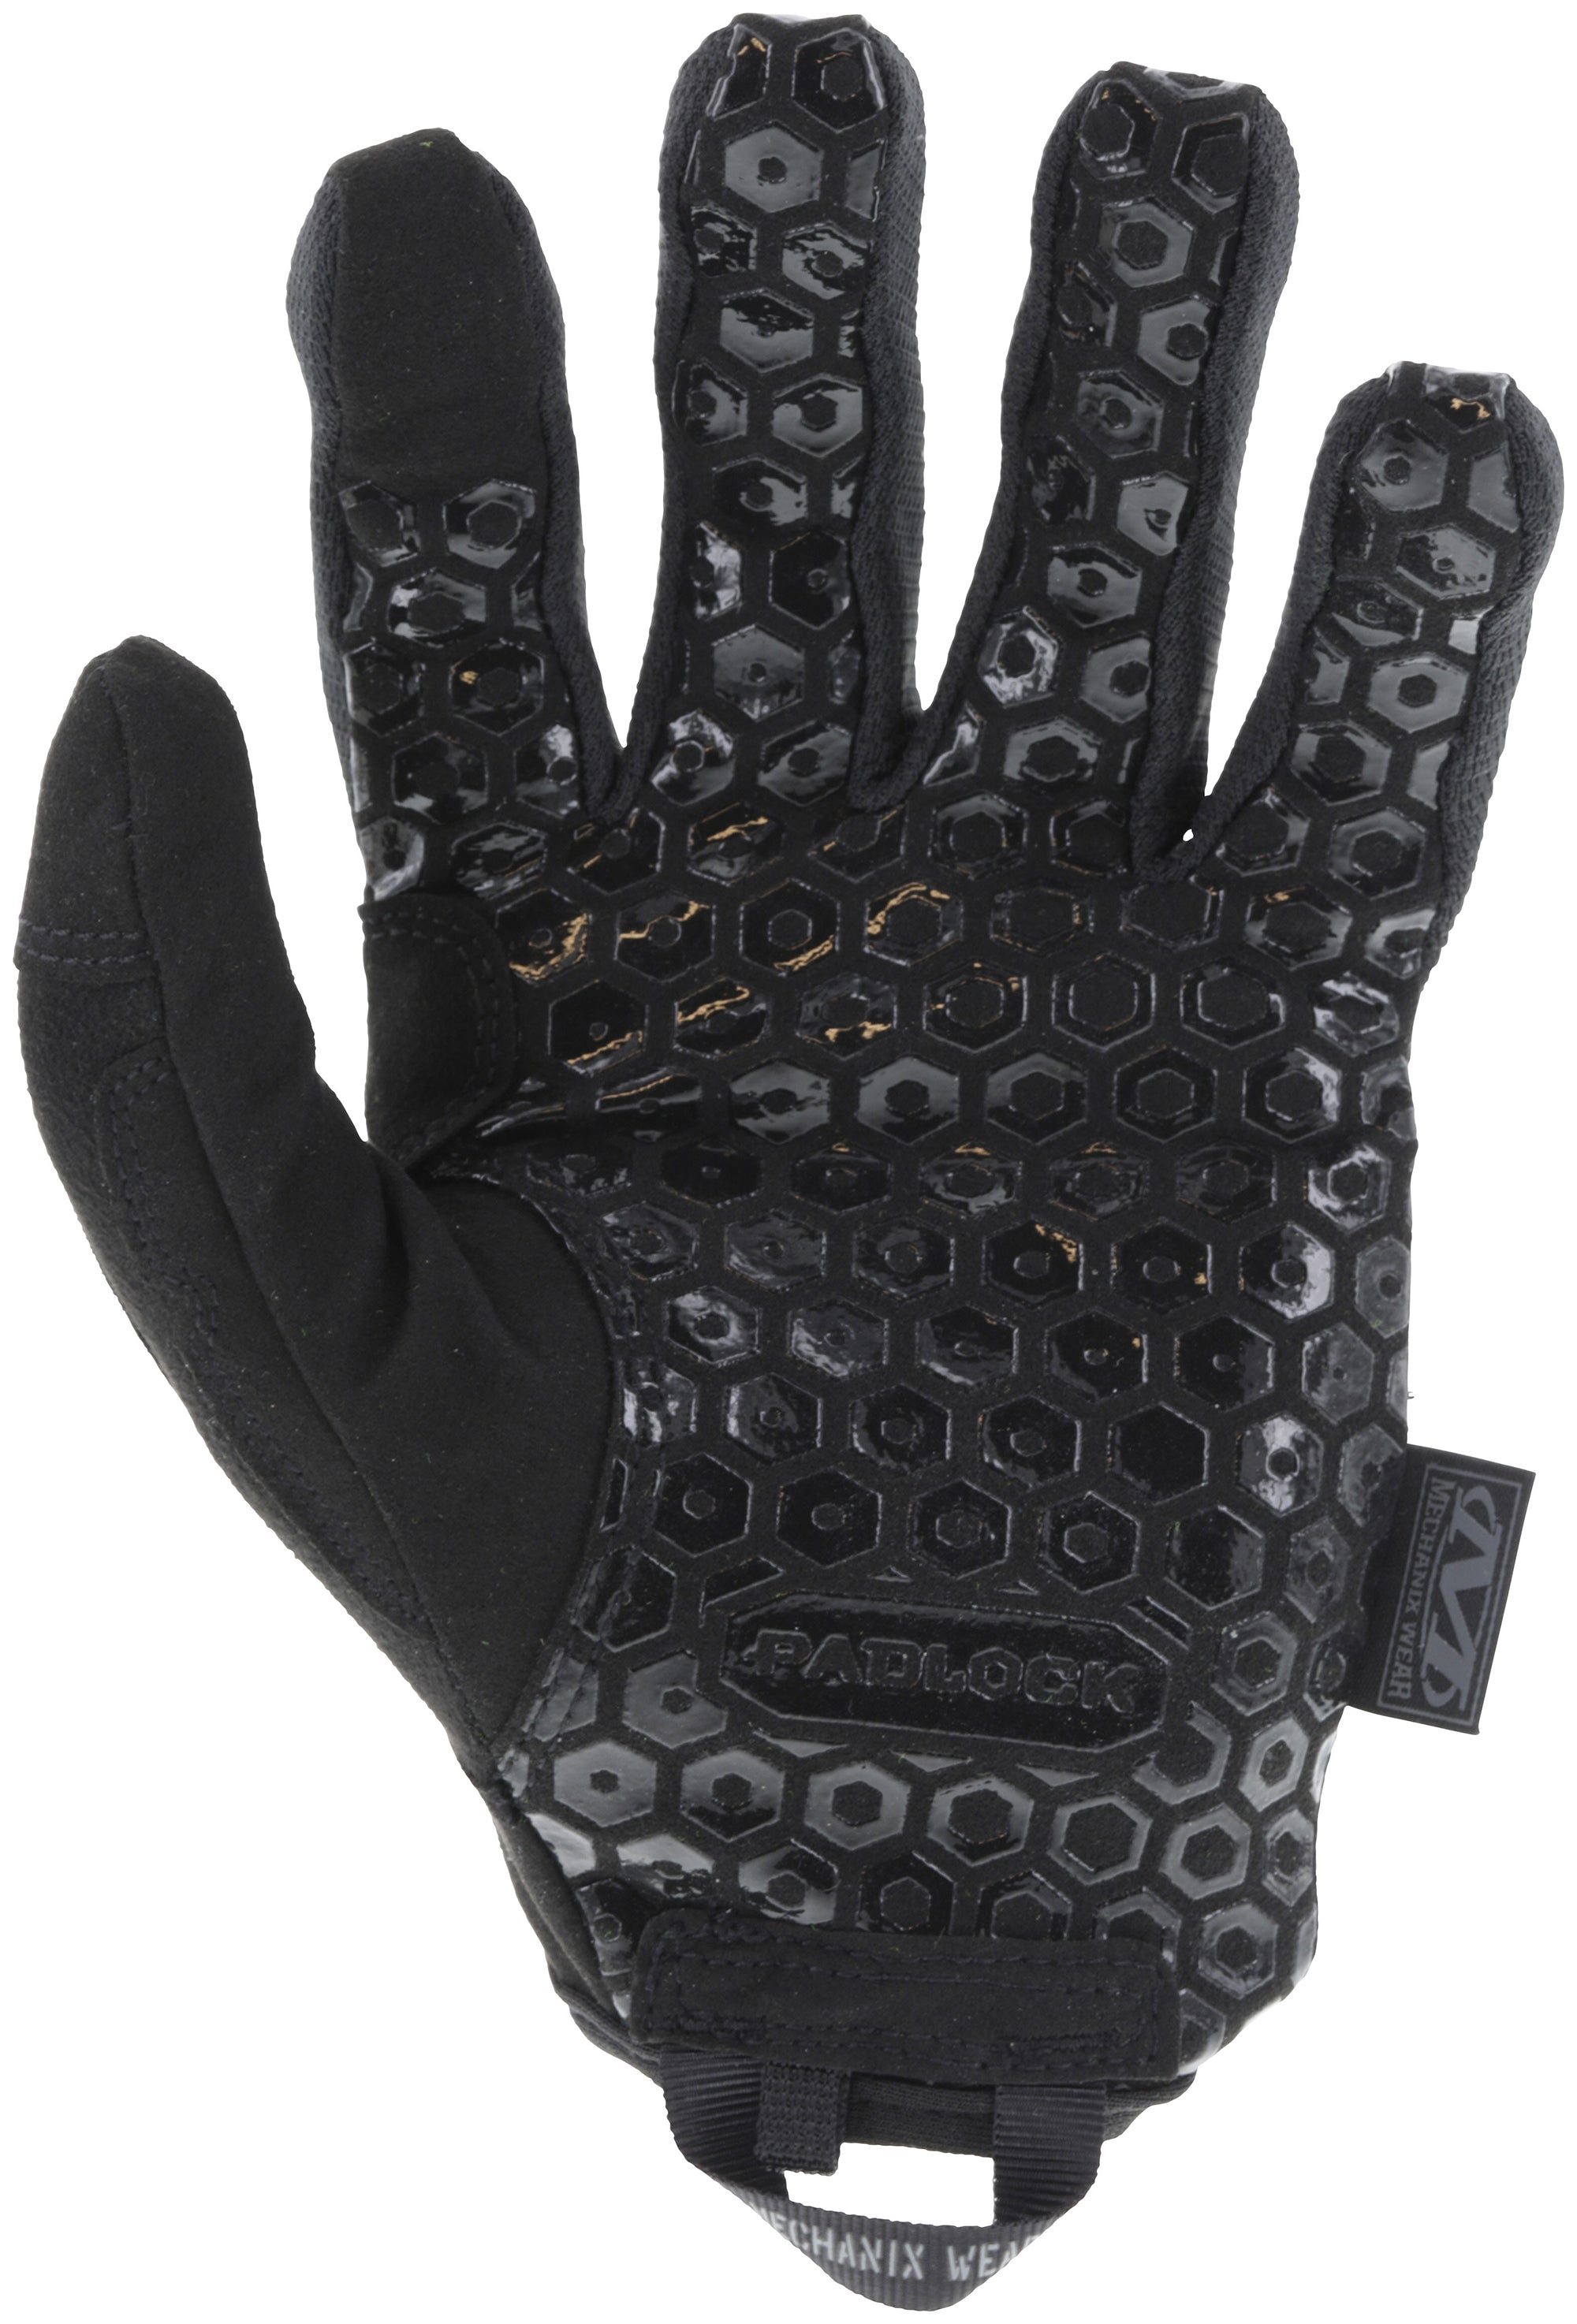 Mechanix Handschuhe Precision Pro - Covert